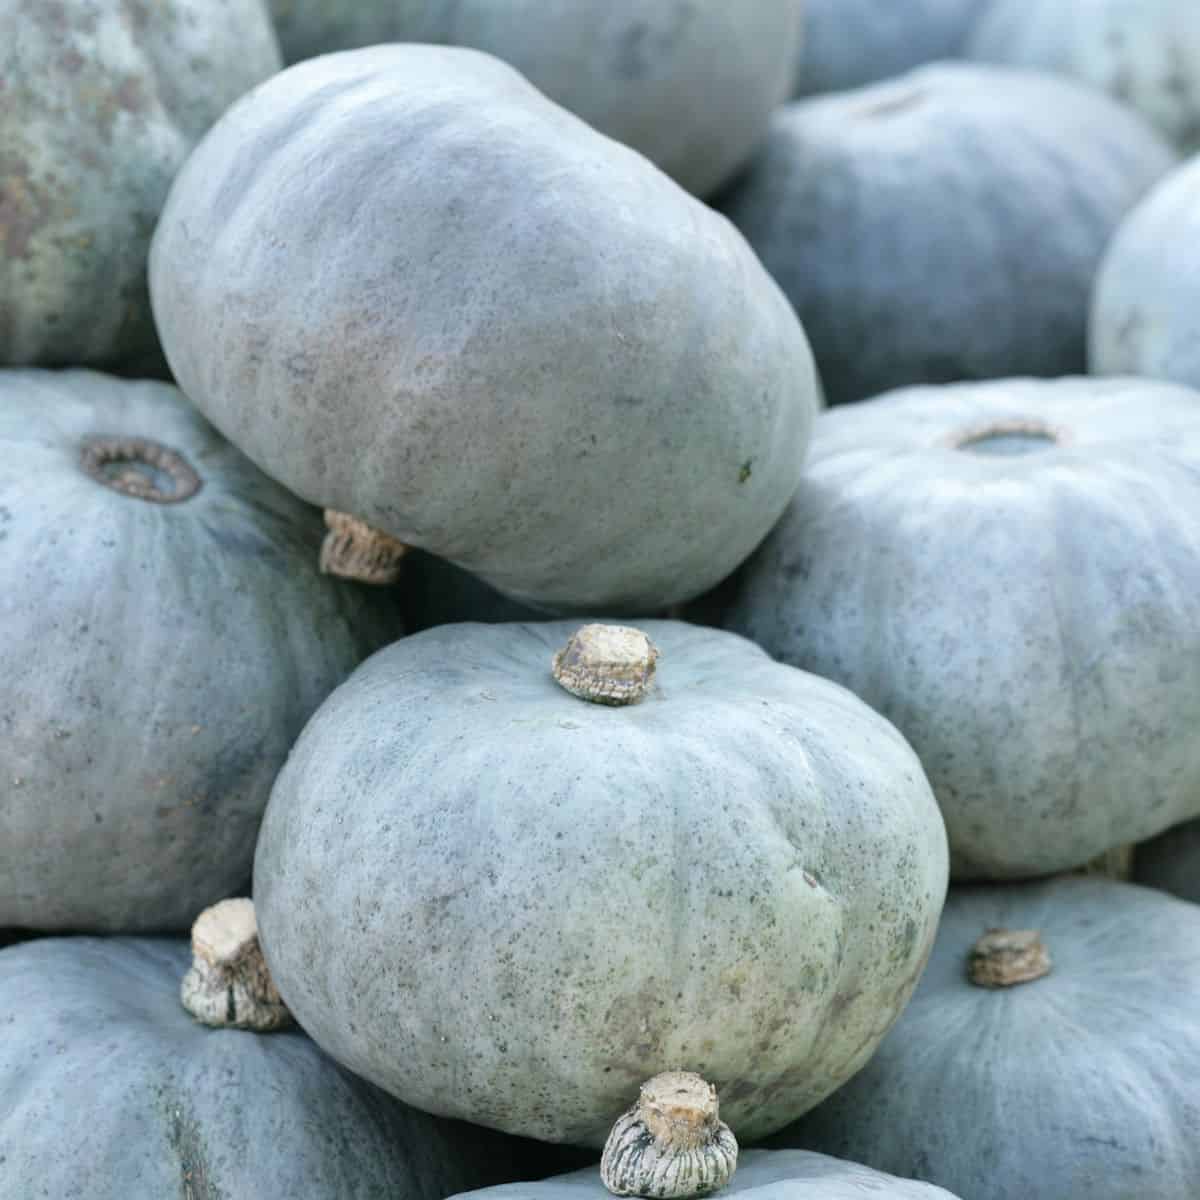 A pile of whole blue/grey crown prince pumpkins.